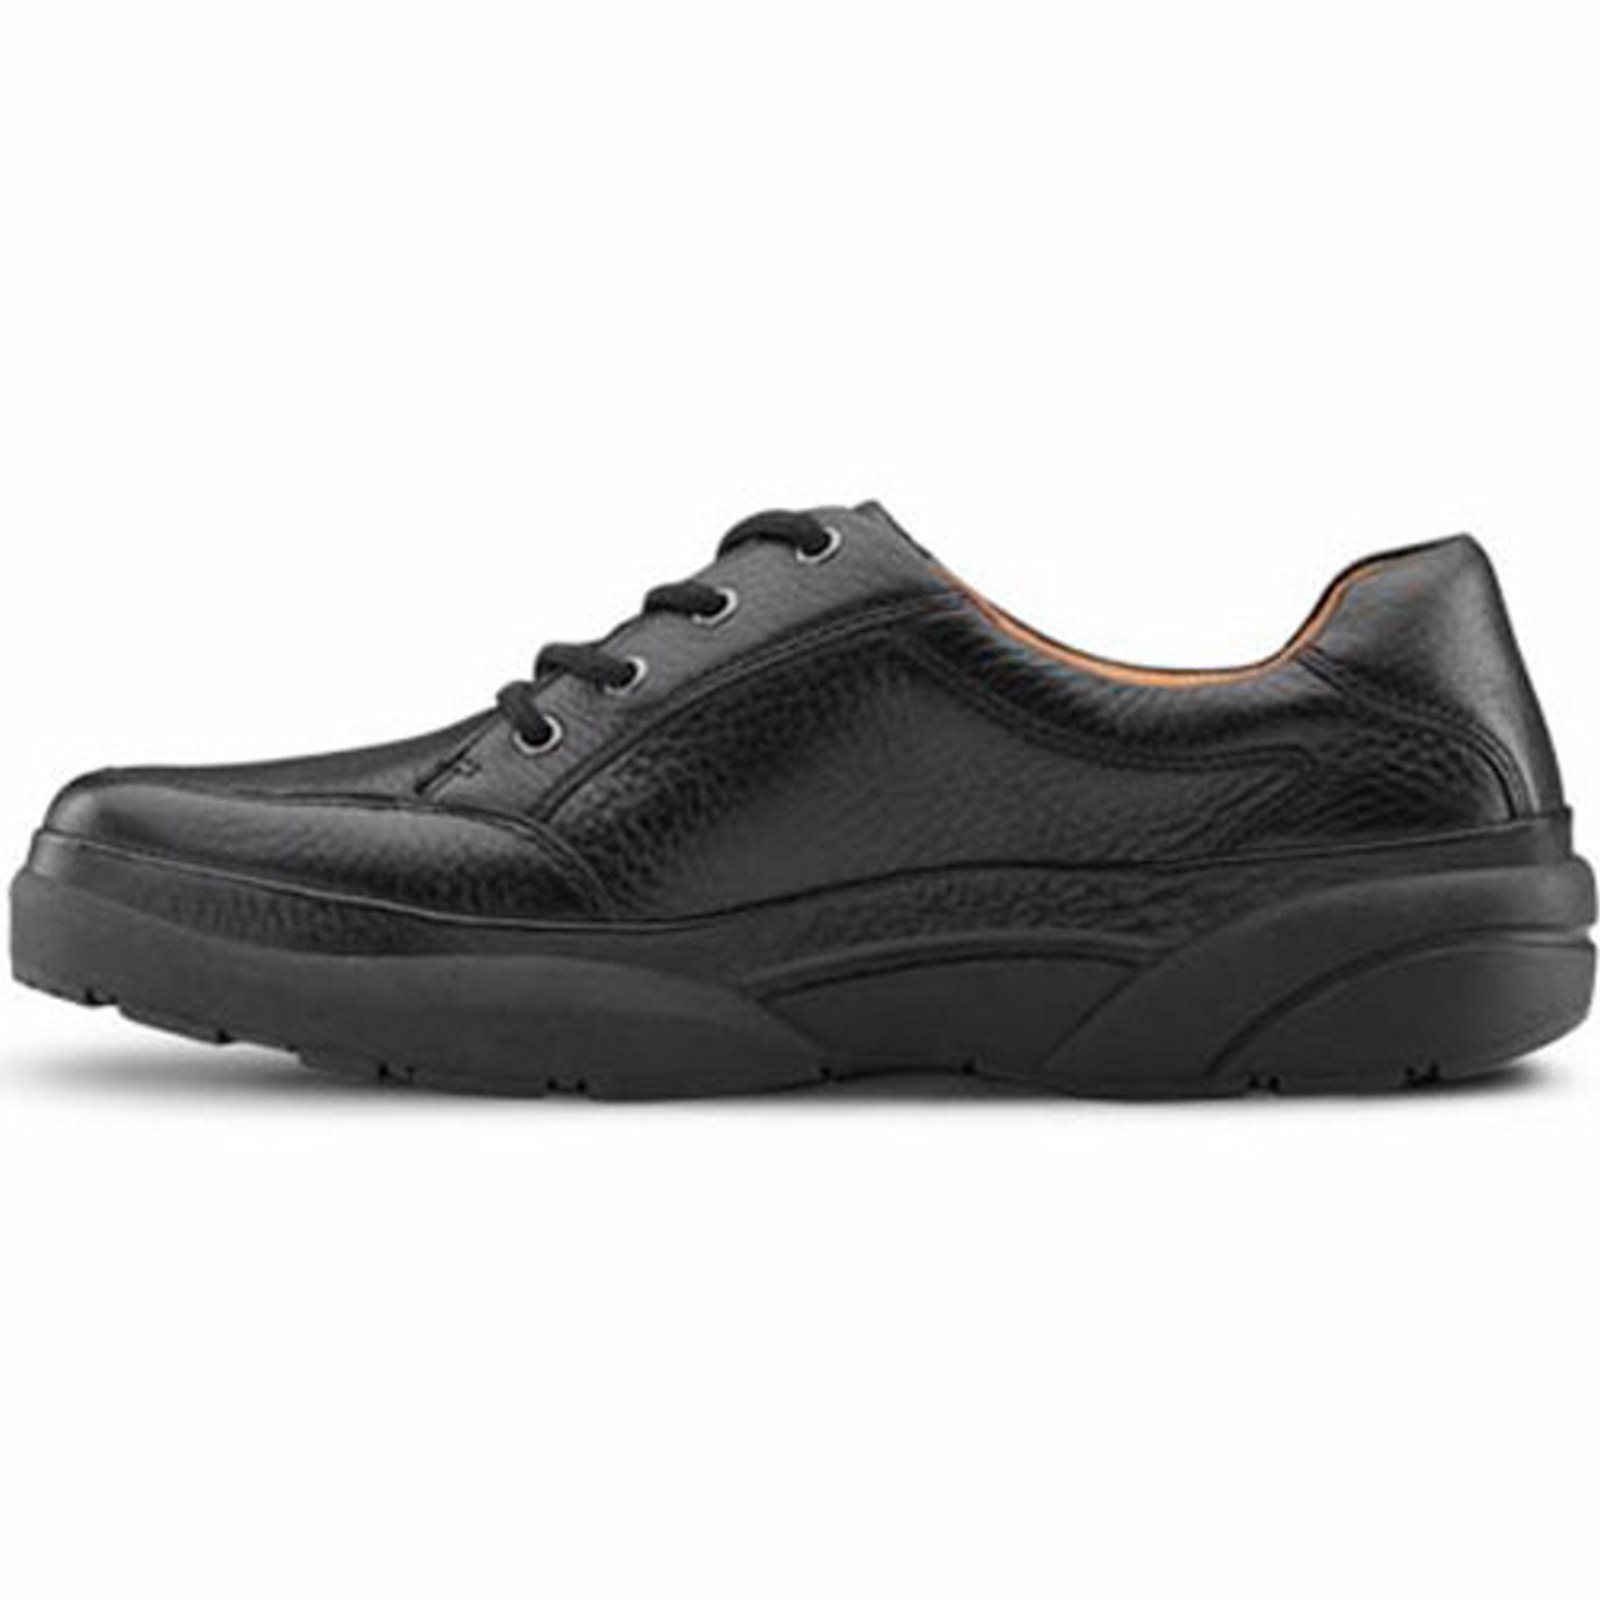 Dr. Comfort Justin Men's Casual Shoe: 9.5 Wide (E/2E) Black Lace - image 4 of 5